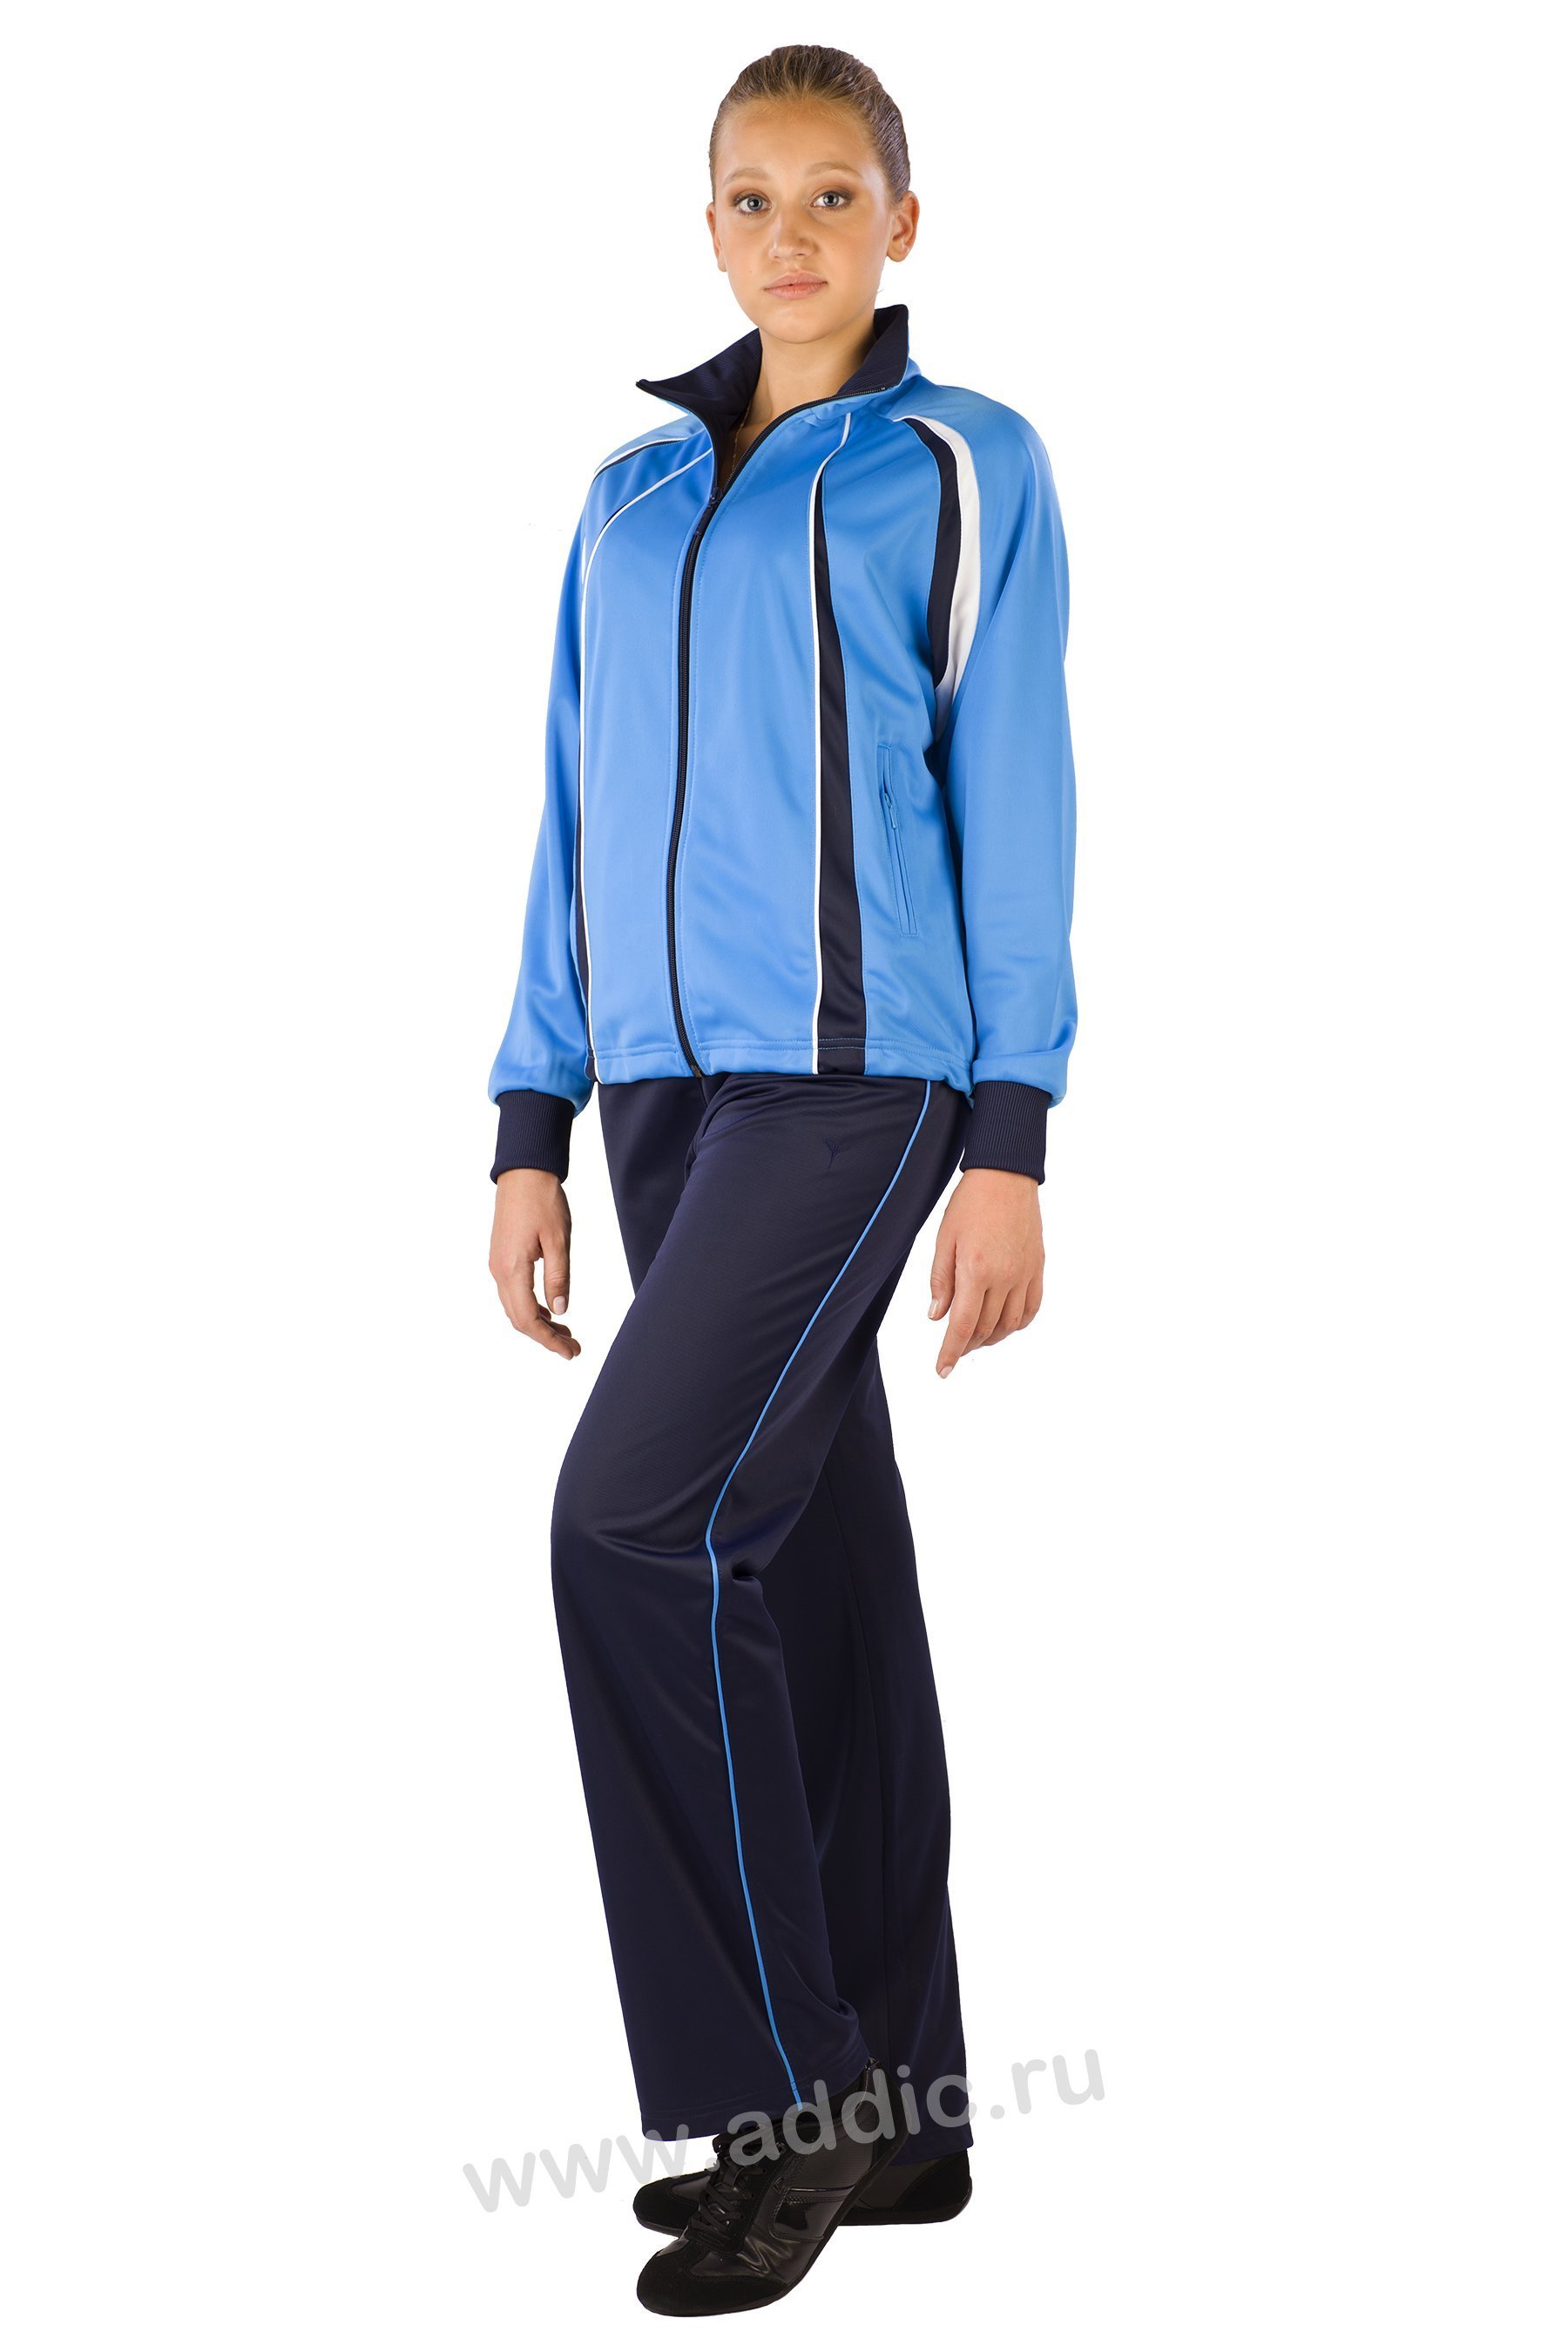 Женский спортивный костюм Addic синий